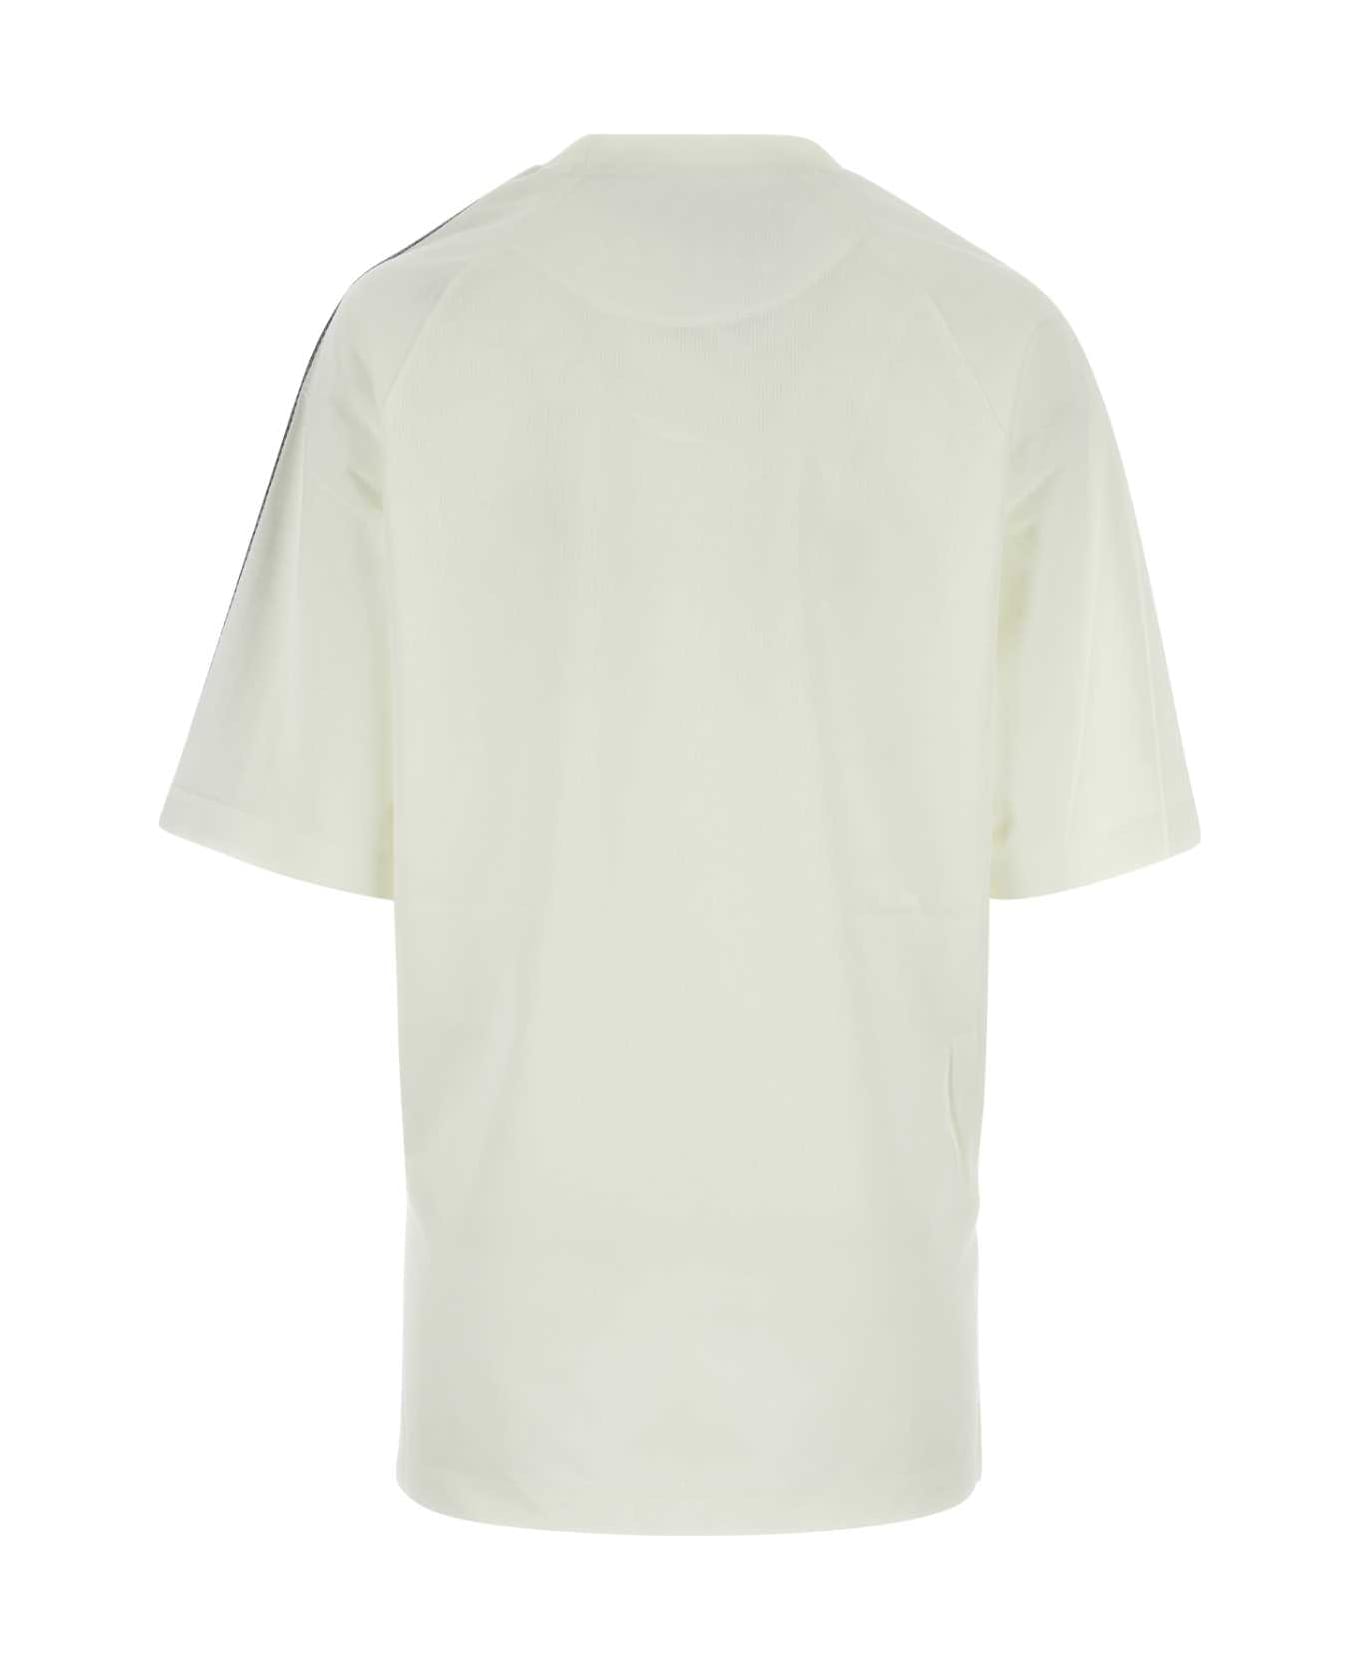 Y-3 White Cotton Blend Oversize T-shirt - OWHITE